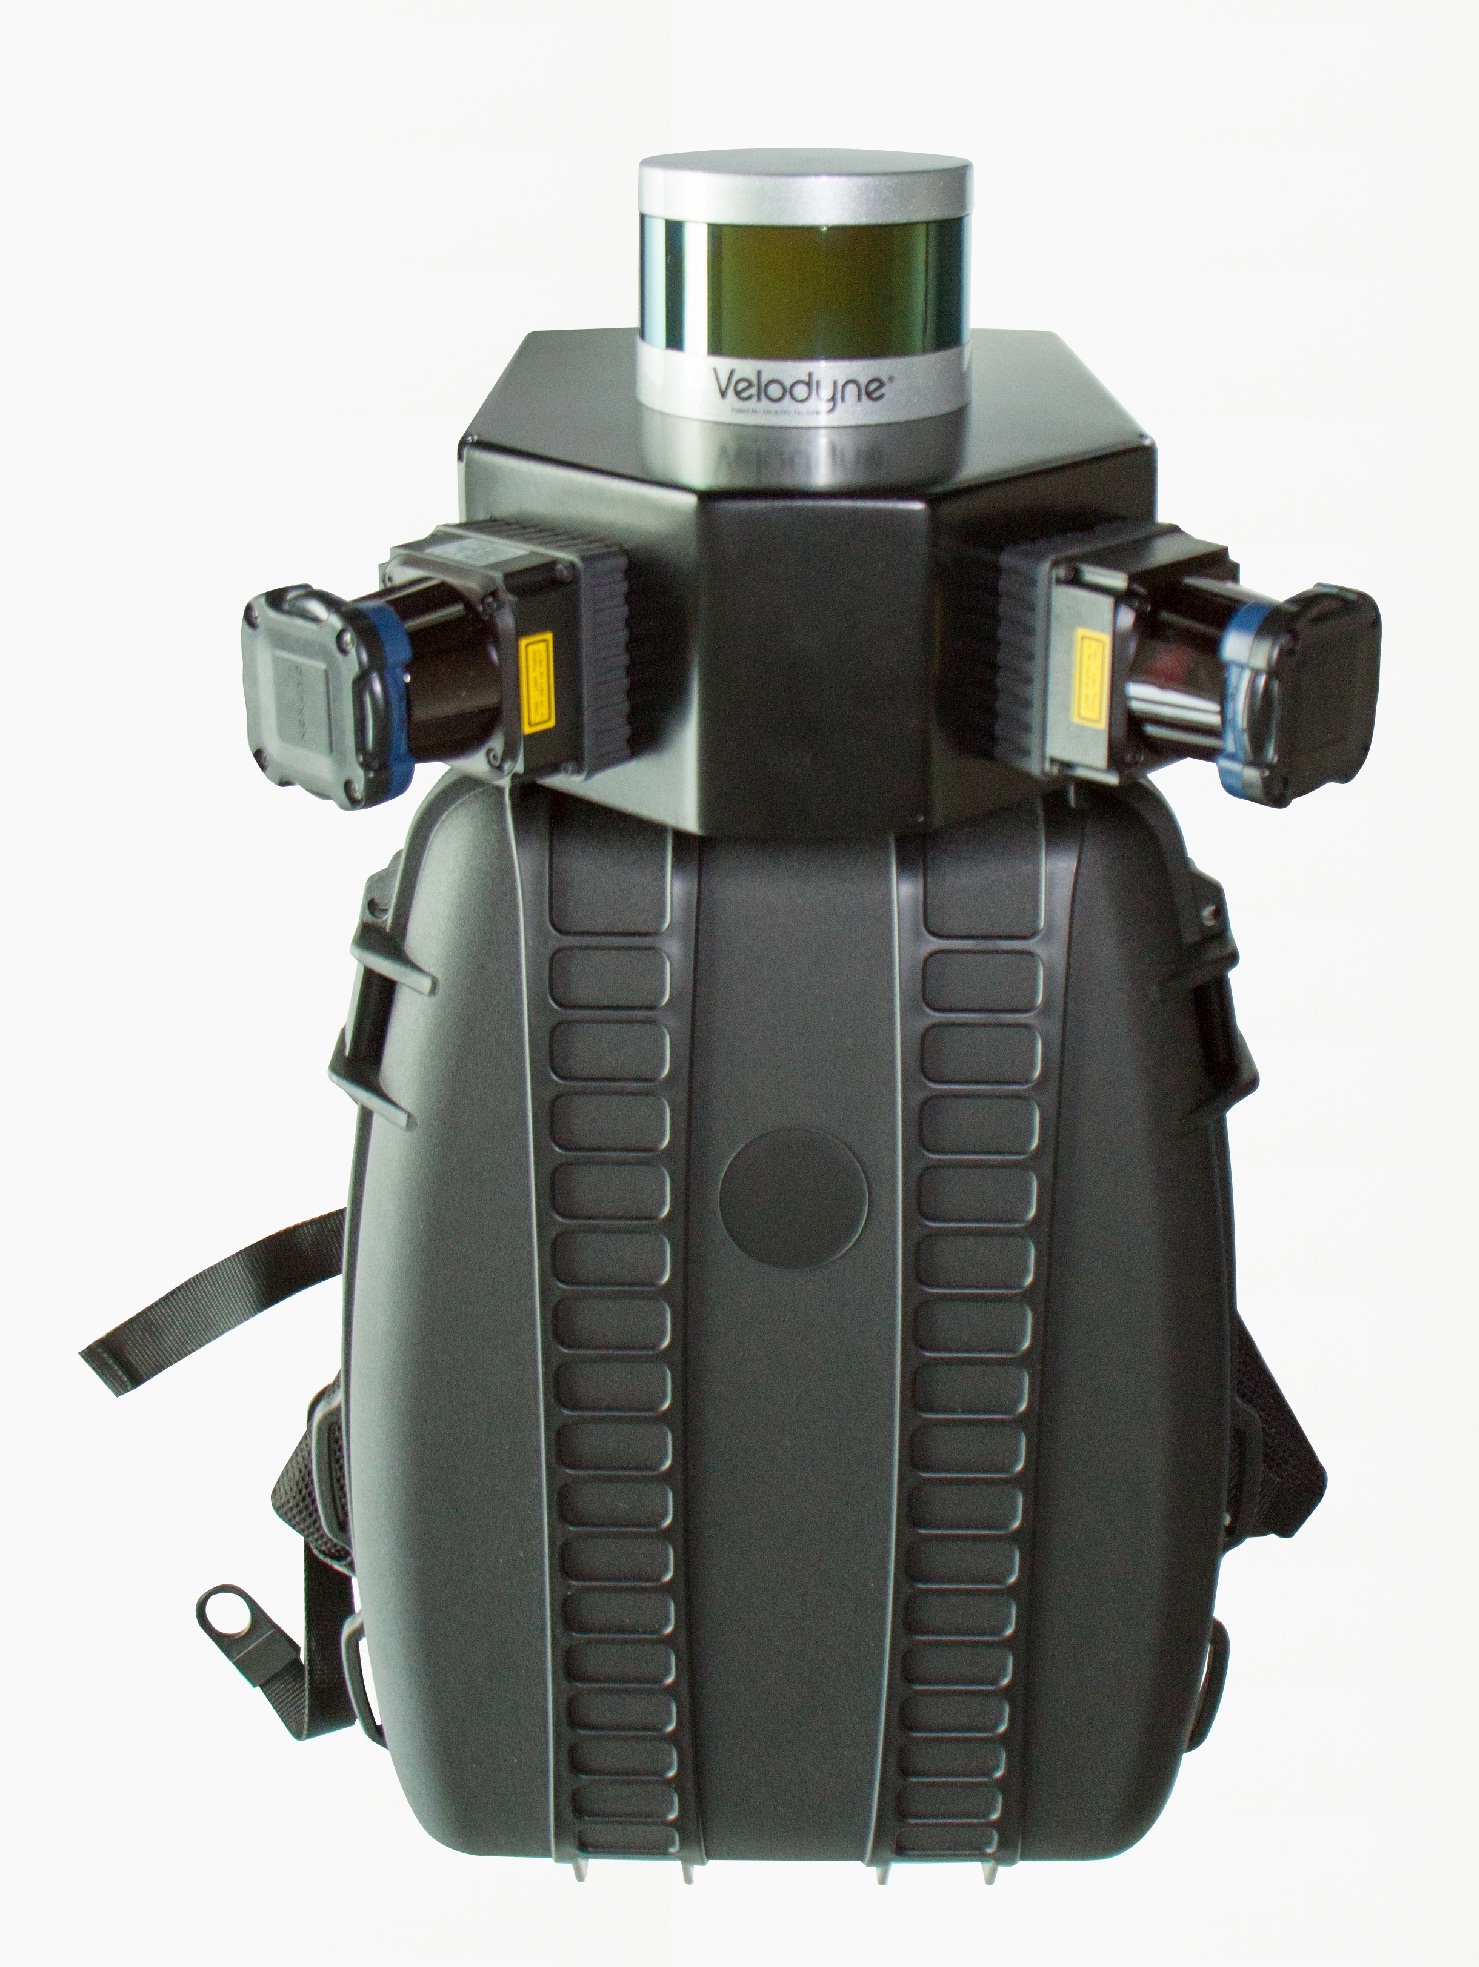 Backpack system from VIAMETRIS, incorporating Velodyne LiDAR Puck